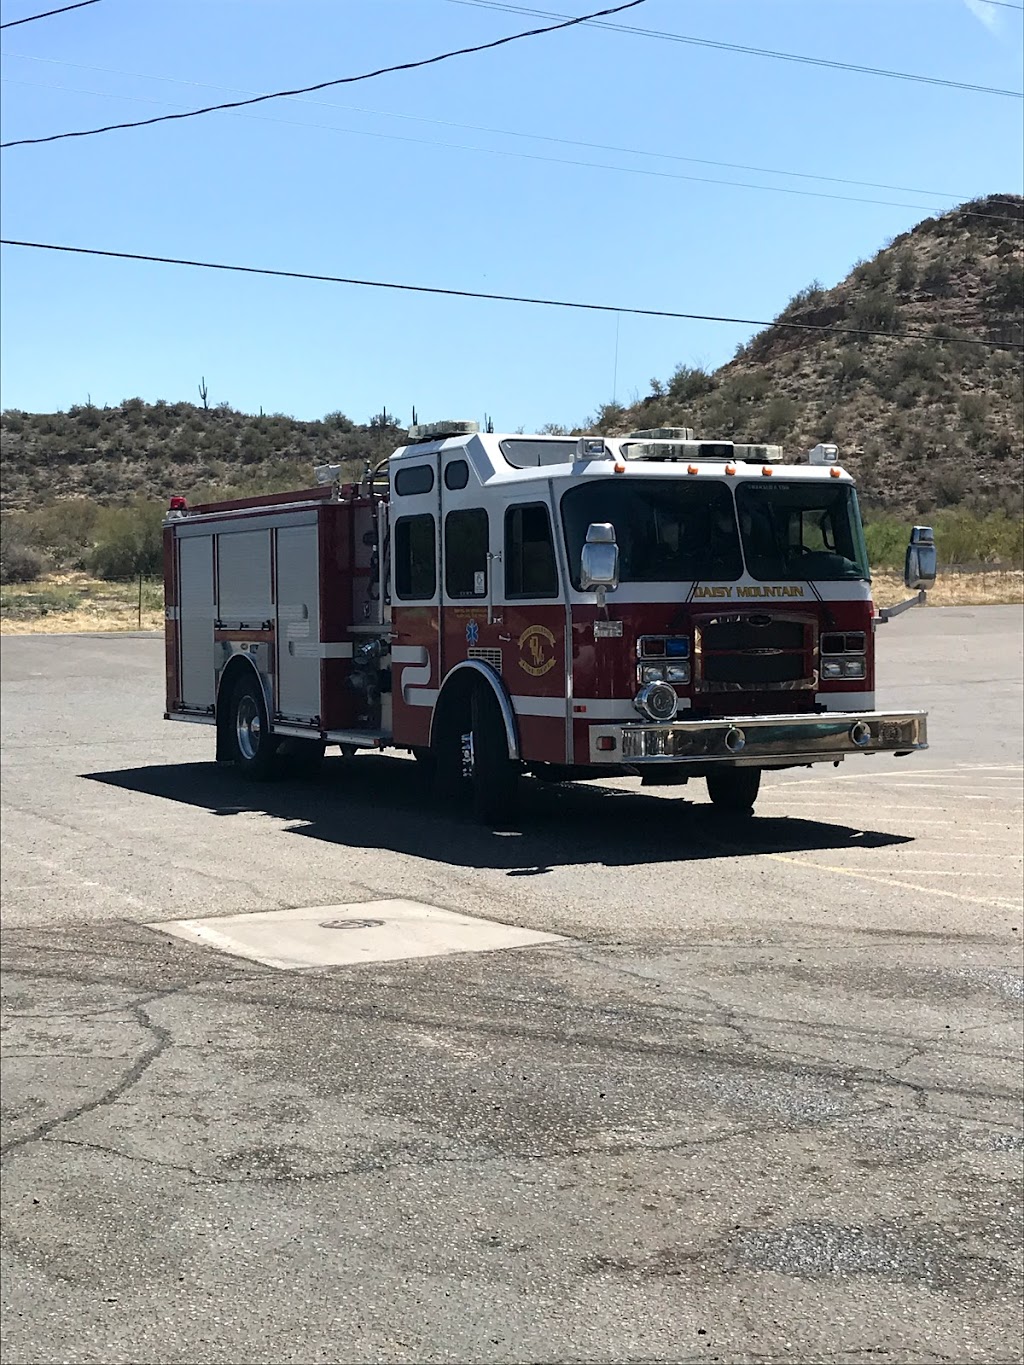 Daisy Mountain Fire Department Station 143 | 35050 S, 35050 Old Black Canyon Hwy, Black Canyon City, AZ 85324, USA | Phone: (623) 465-7400